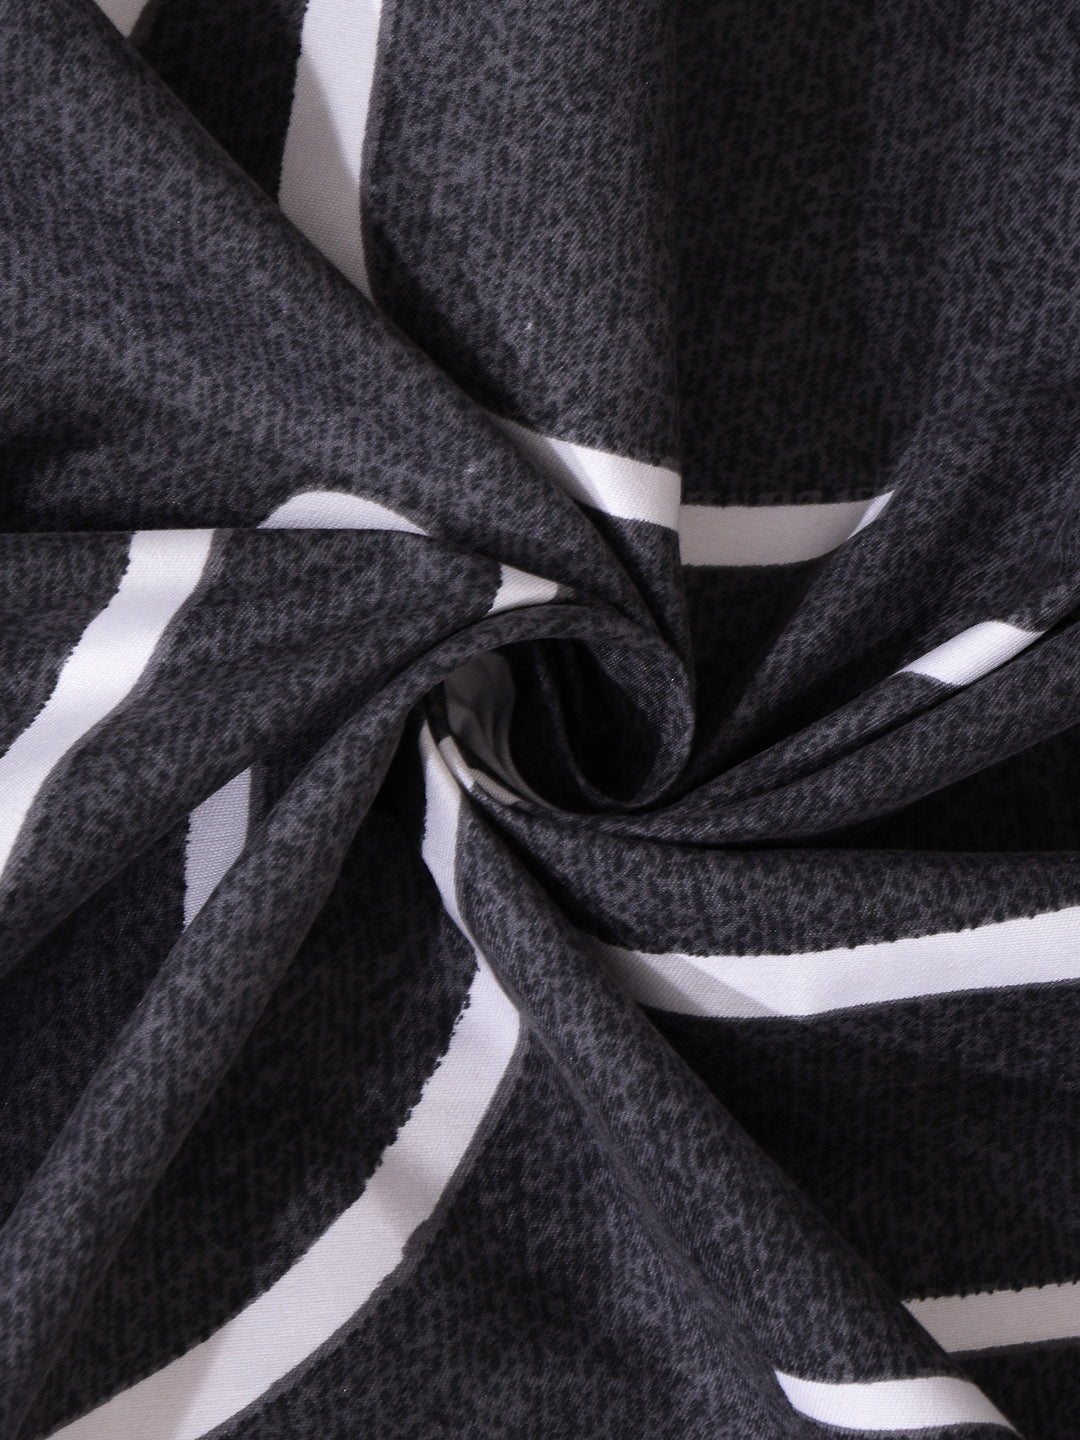 Arrabi Black Geometric TC Cotton Blend Super King Size Bedsheet with 2 Pillow Covers (270 x 260 cm)